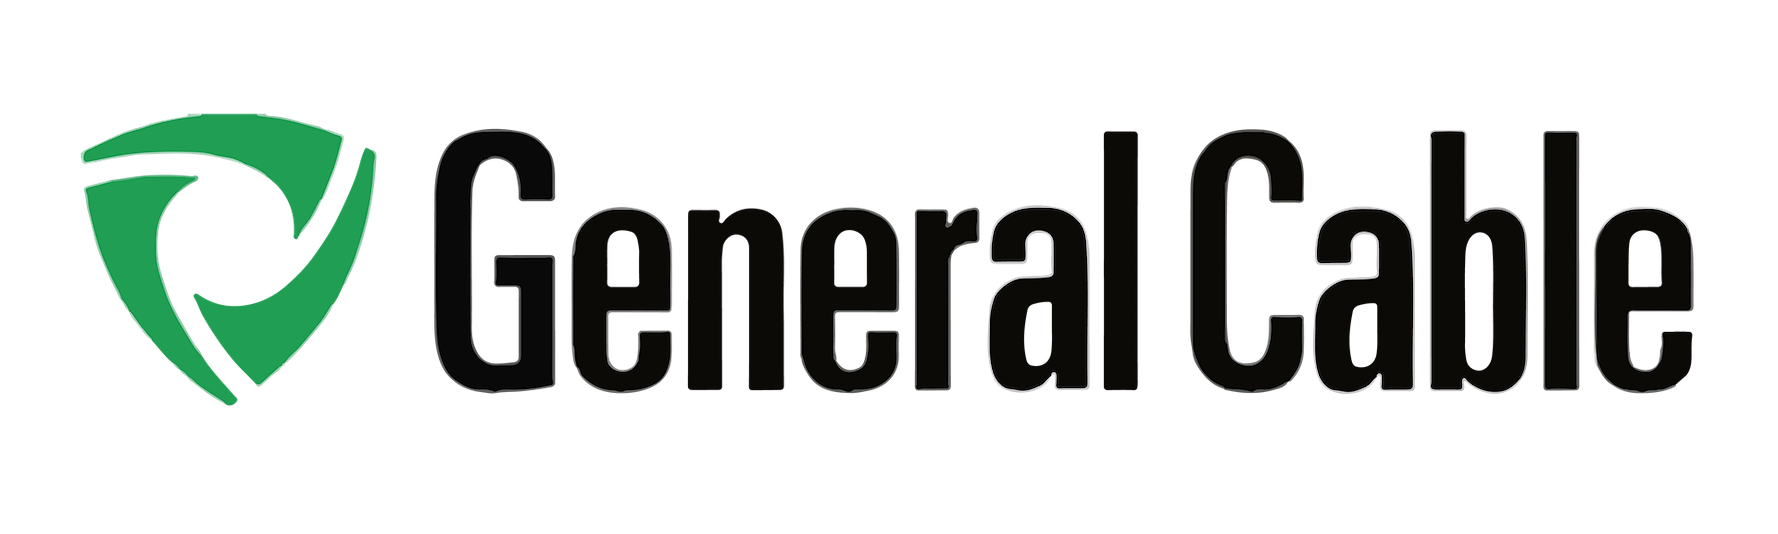 Logo de General Cable